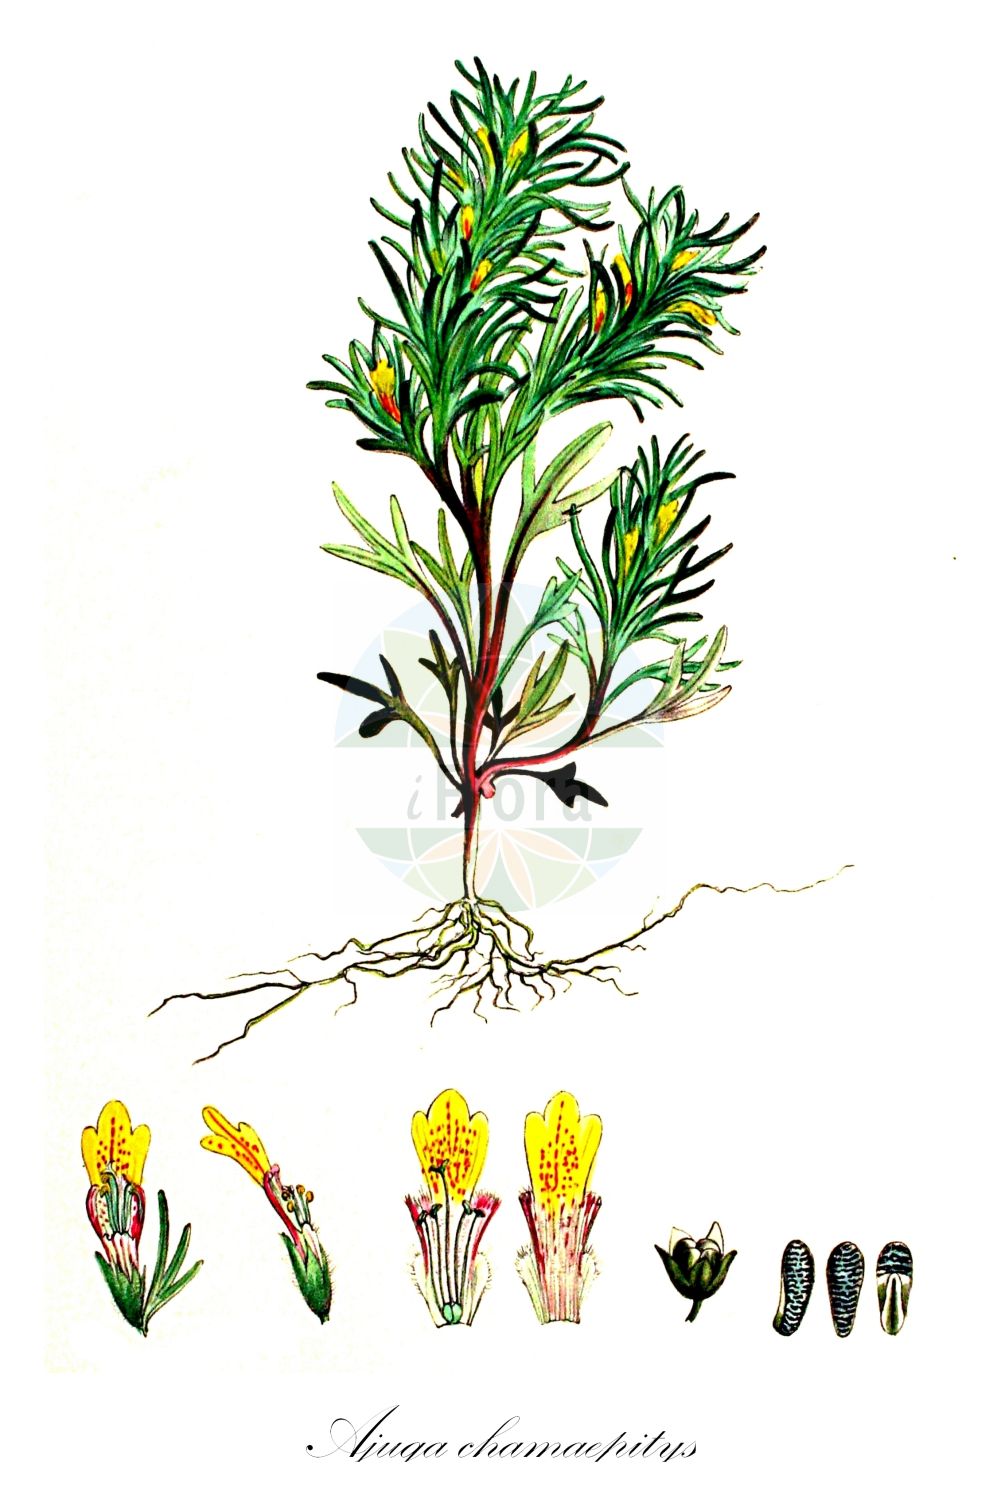 Historische Abbildung von Ajuga chamaepitys (Gelber Günsel - Ground-pine). Das Bild zeigt Blatt, Bluete, Frucht und Same. ---- Historical Drawing of Ajuga chamaepitys (Gelber Günsel - Ground-pine). The image is showing leaf, flower, fruit and seed.(Ajuga chamaepitys,Gelber Günsel,Ground-pine,Ajuga chamaepitys,Bugula chamaepithys,Bulga chamaepitys,Chamaepitys vulgaris,Teucrium chamaepitys,Gelber Guensel,Acker-Guensel,Schlagkraeutlein,Ground-pine,Yellow Bugle,Ajuga,Günsel,Bugle,Lamiaceae,Lippenblütengewächse,Nettle family,Blatt,Bluete,Frucht,Same,leaf,flower,fruit,seed,Kops (1800-1934))